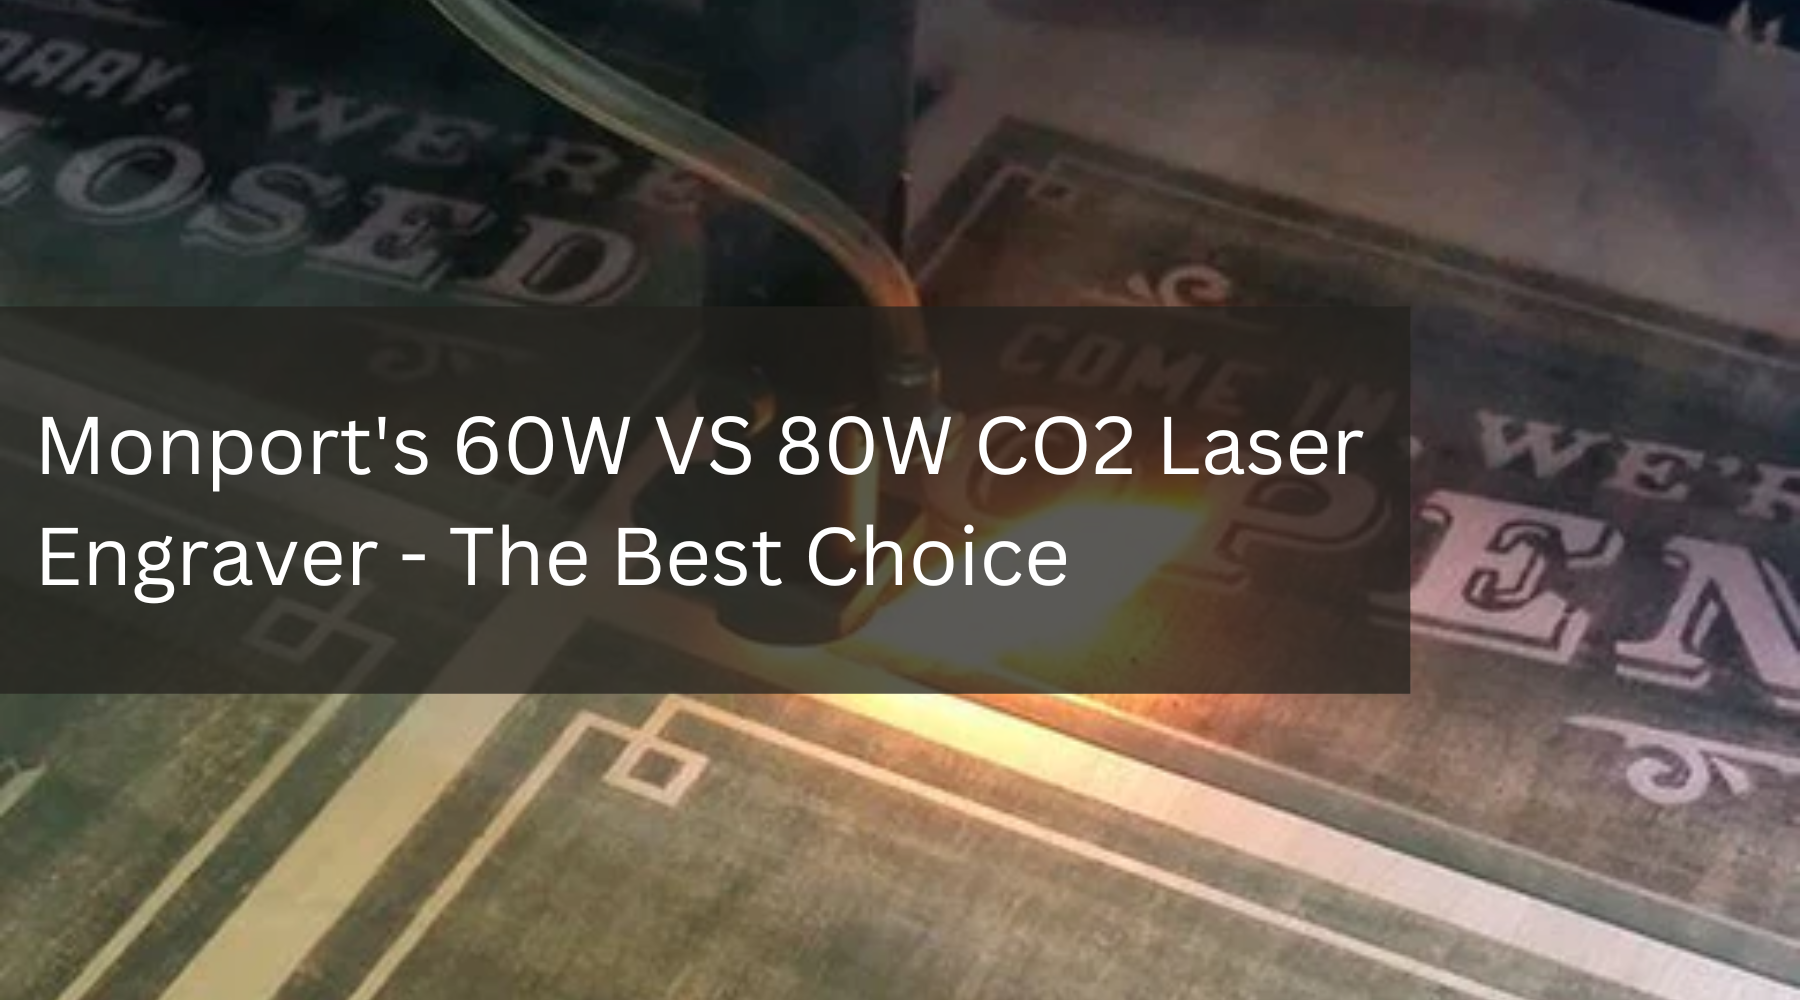 Monport's 60W VS 80W CO2 Laser Engraver - The Best Choice